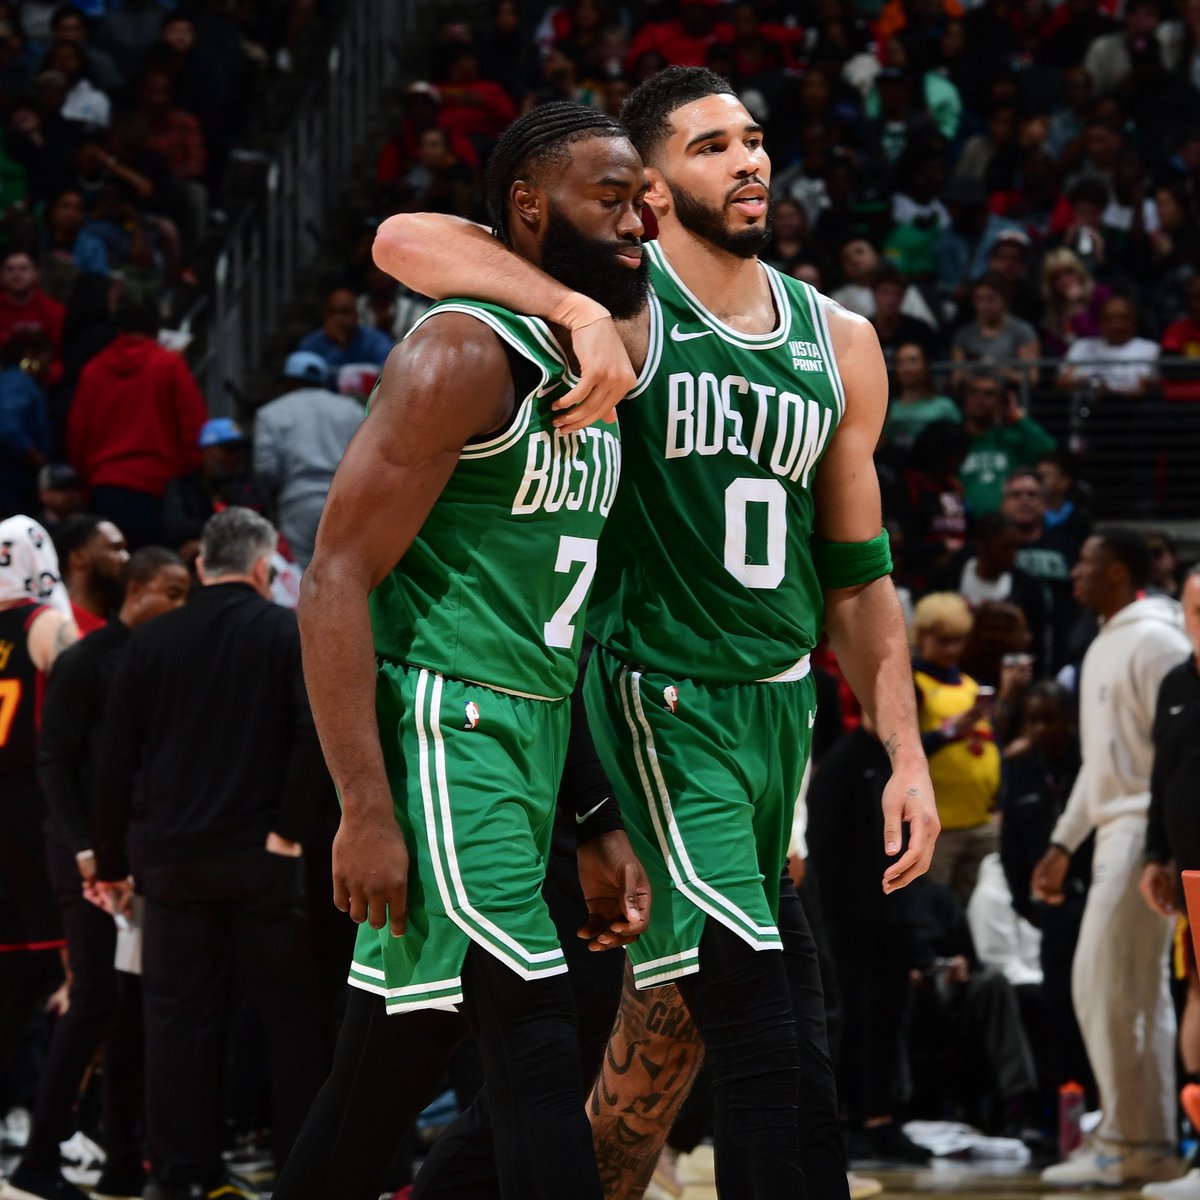 Cavs? Magic? Don’t care. Celtics in 5.